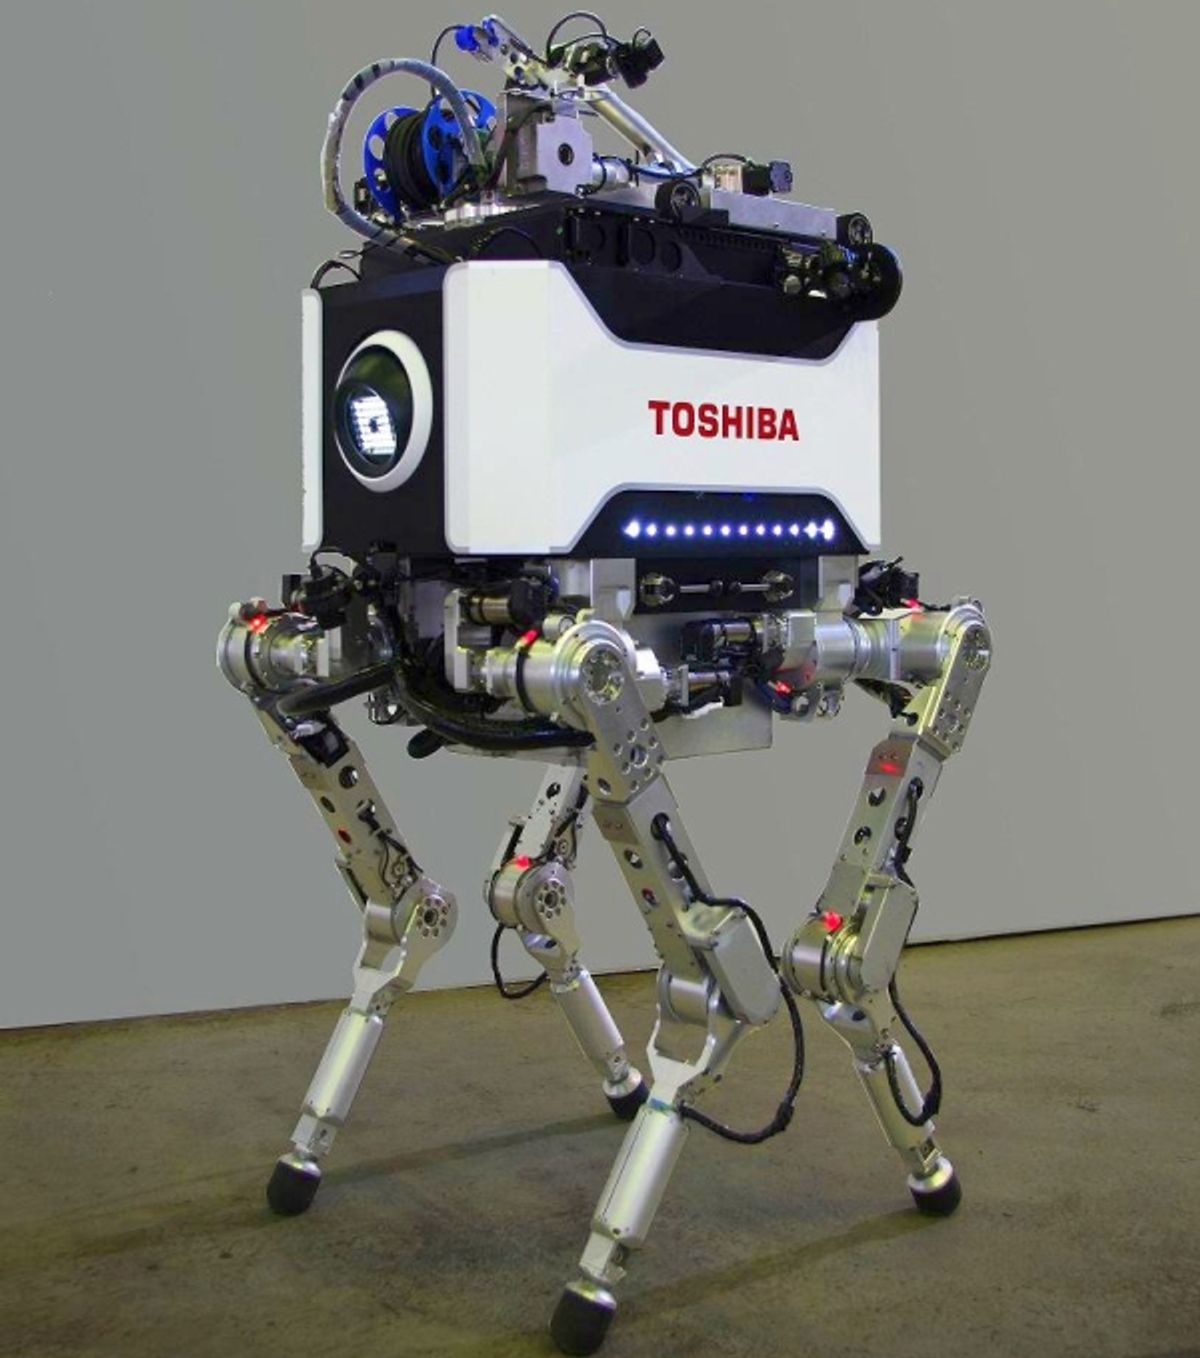 Toshiba Unveils Robot for Disaster Response